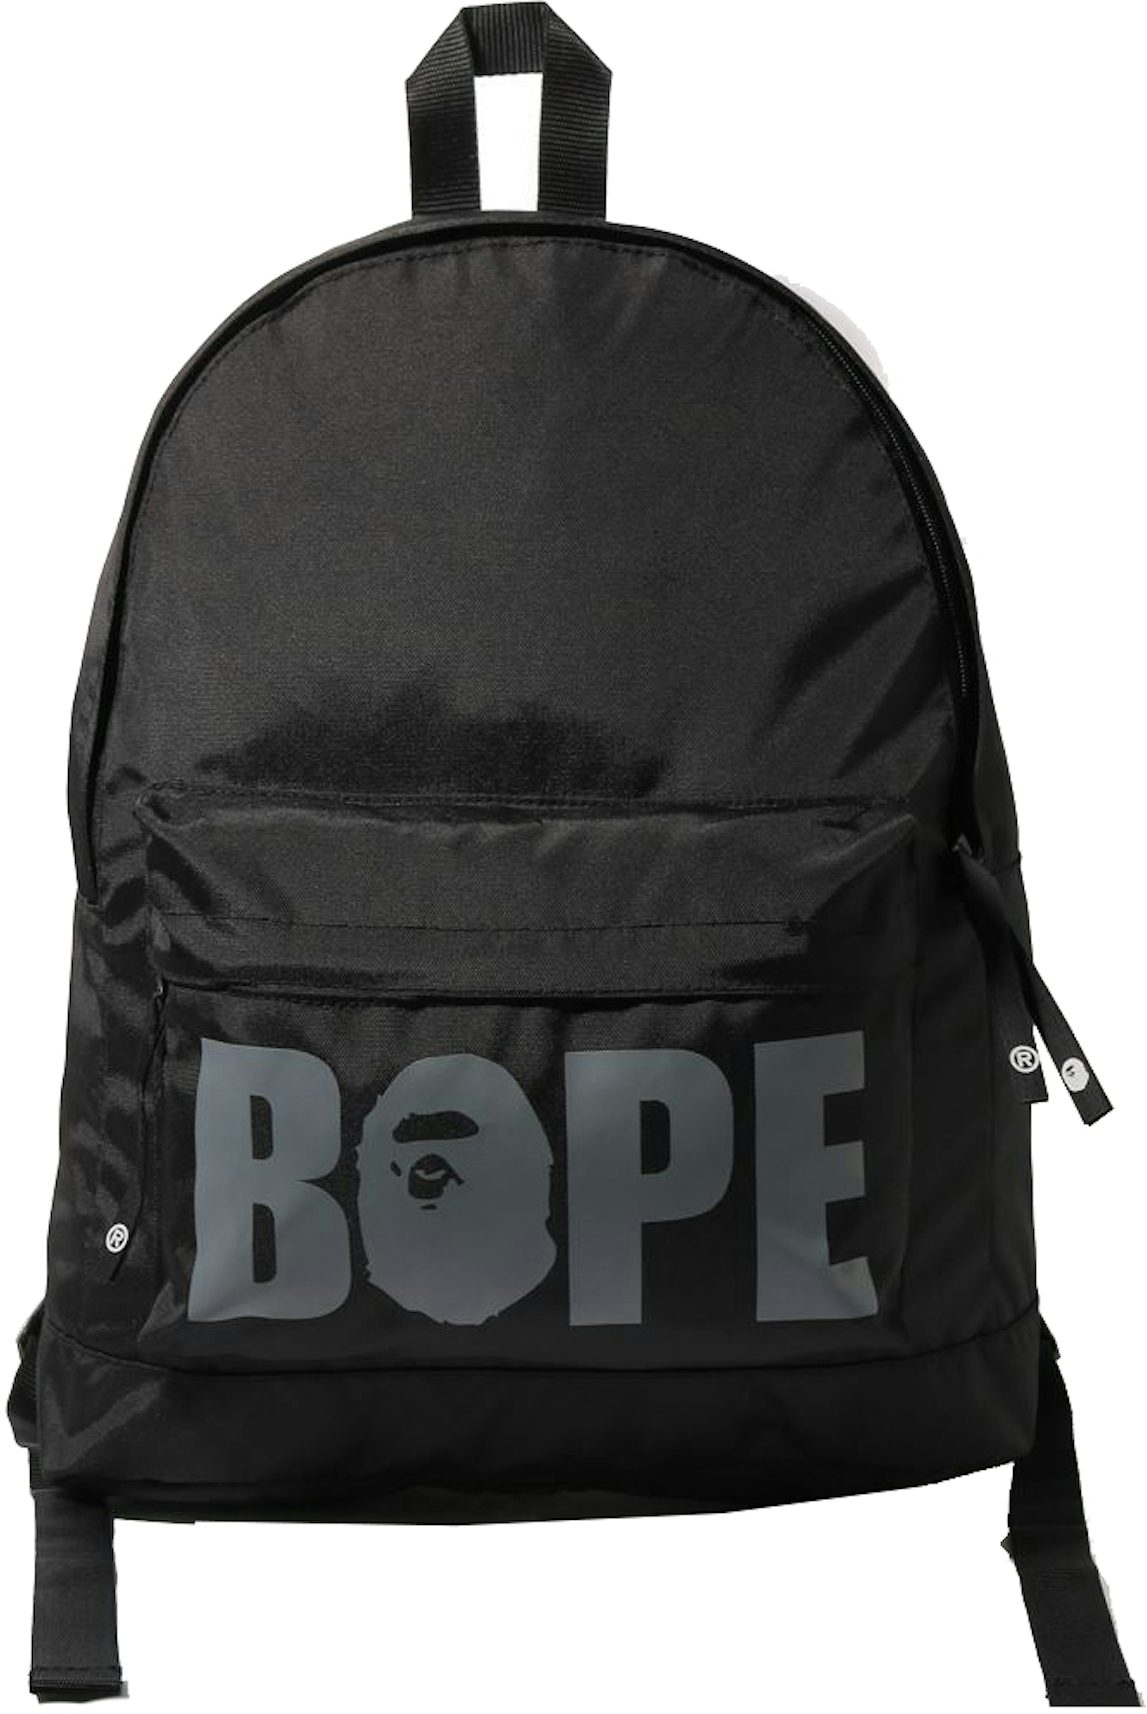 Bape x Coach Backpack Monogram Navy BATHING APE Collaboration Rare